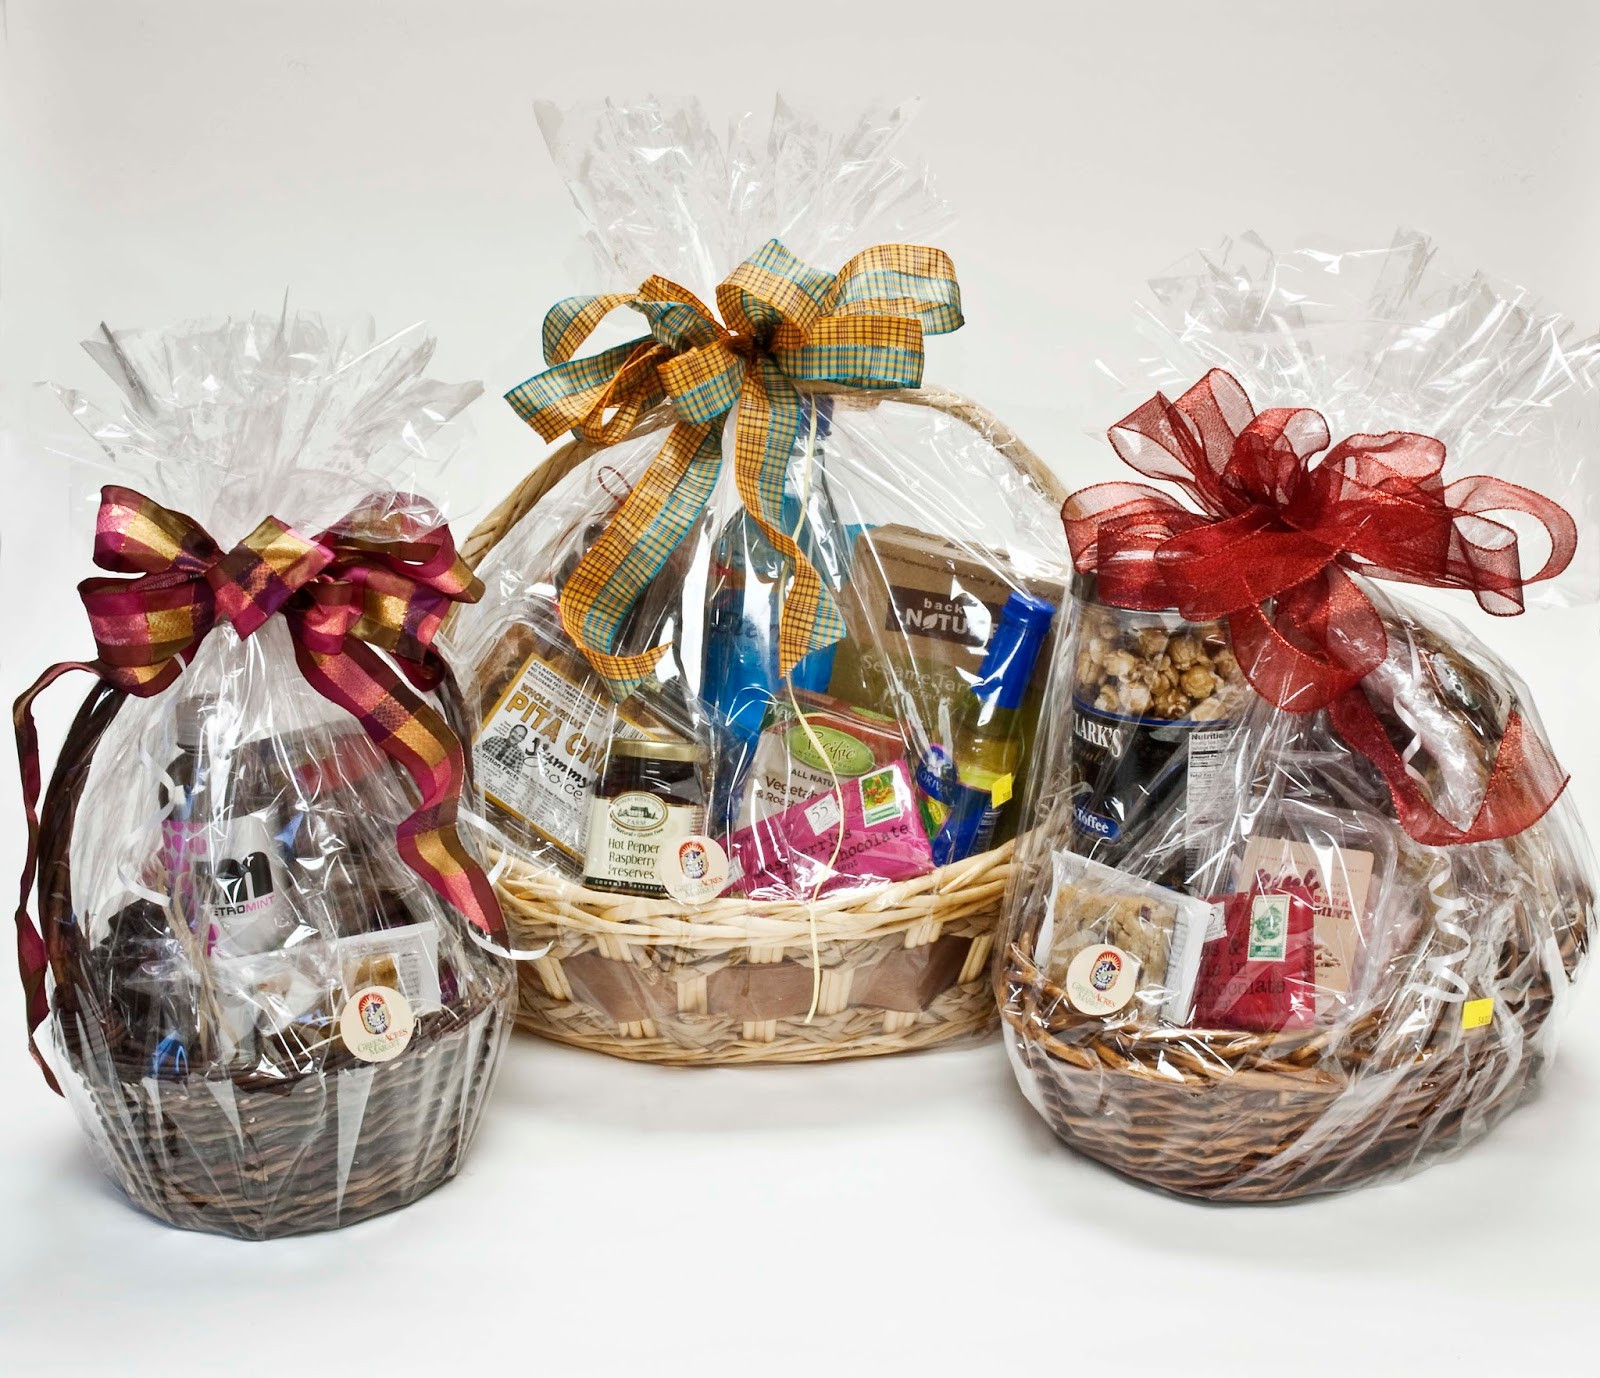 Gift Baskets Business Ideas
 Gift Basket Business How to Start a Gift Basket Business